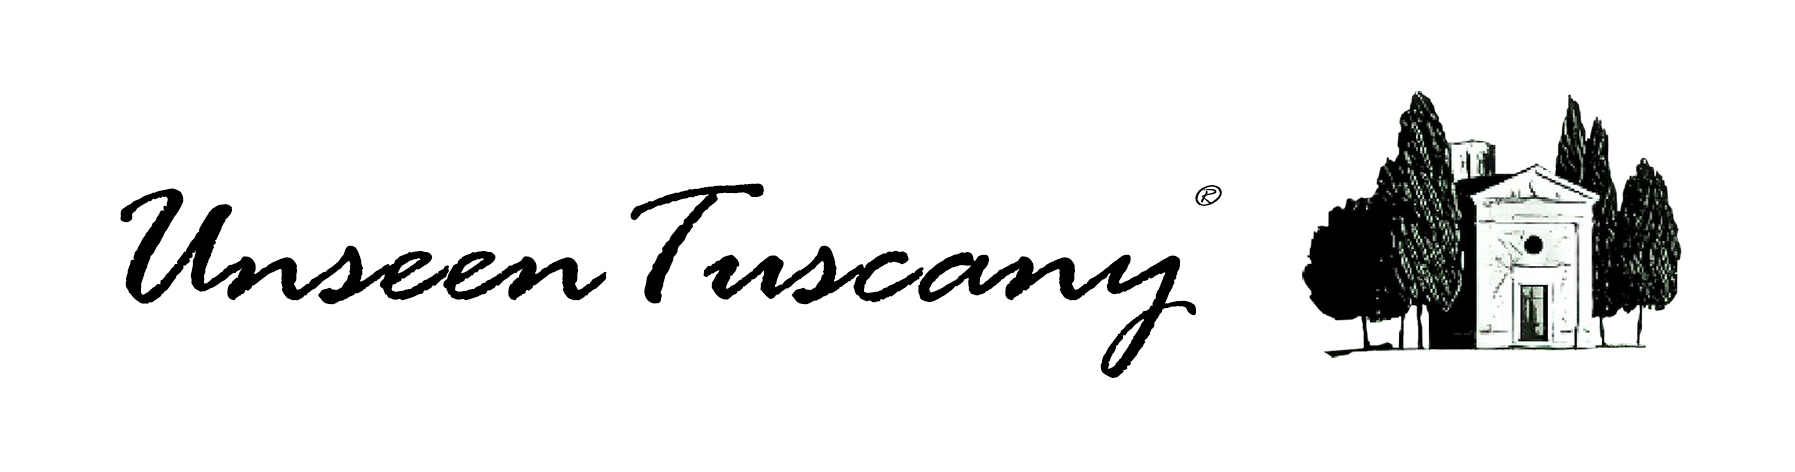 Unseen Tuscany